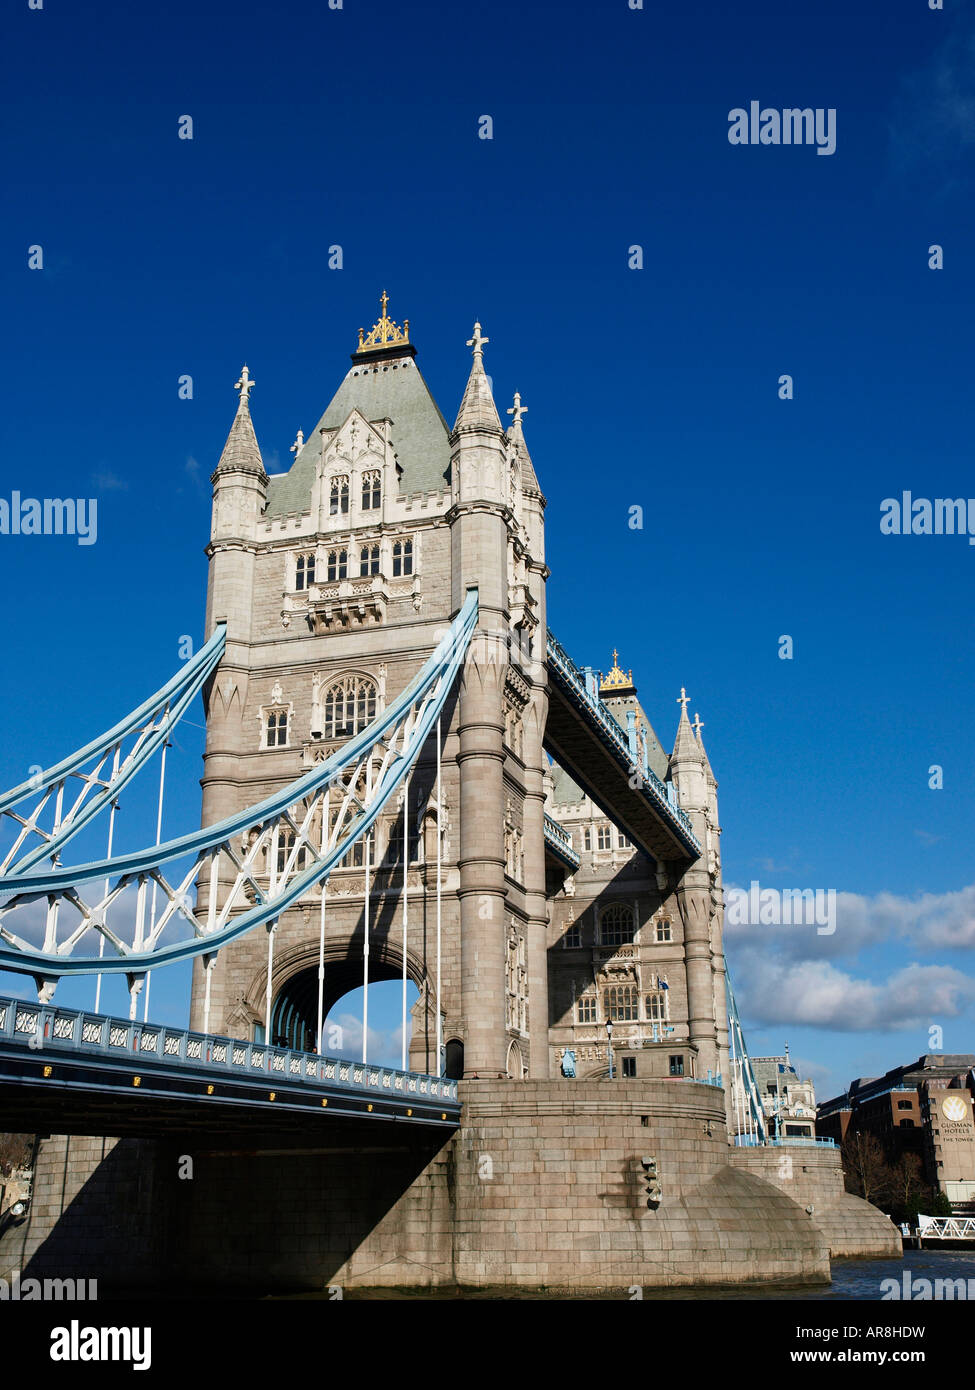 Tower Bridge London England UK Europe EU Stock Photo